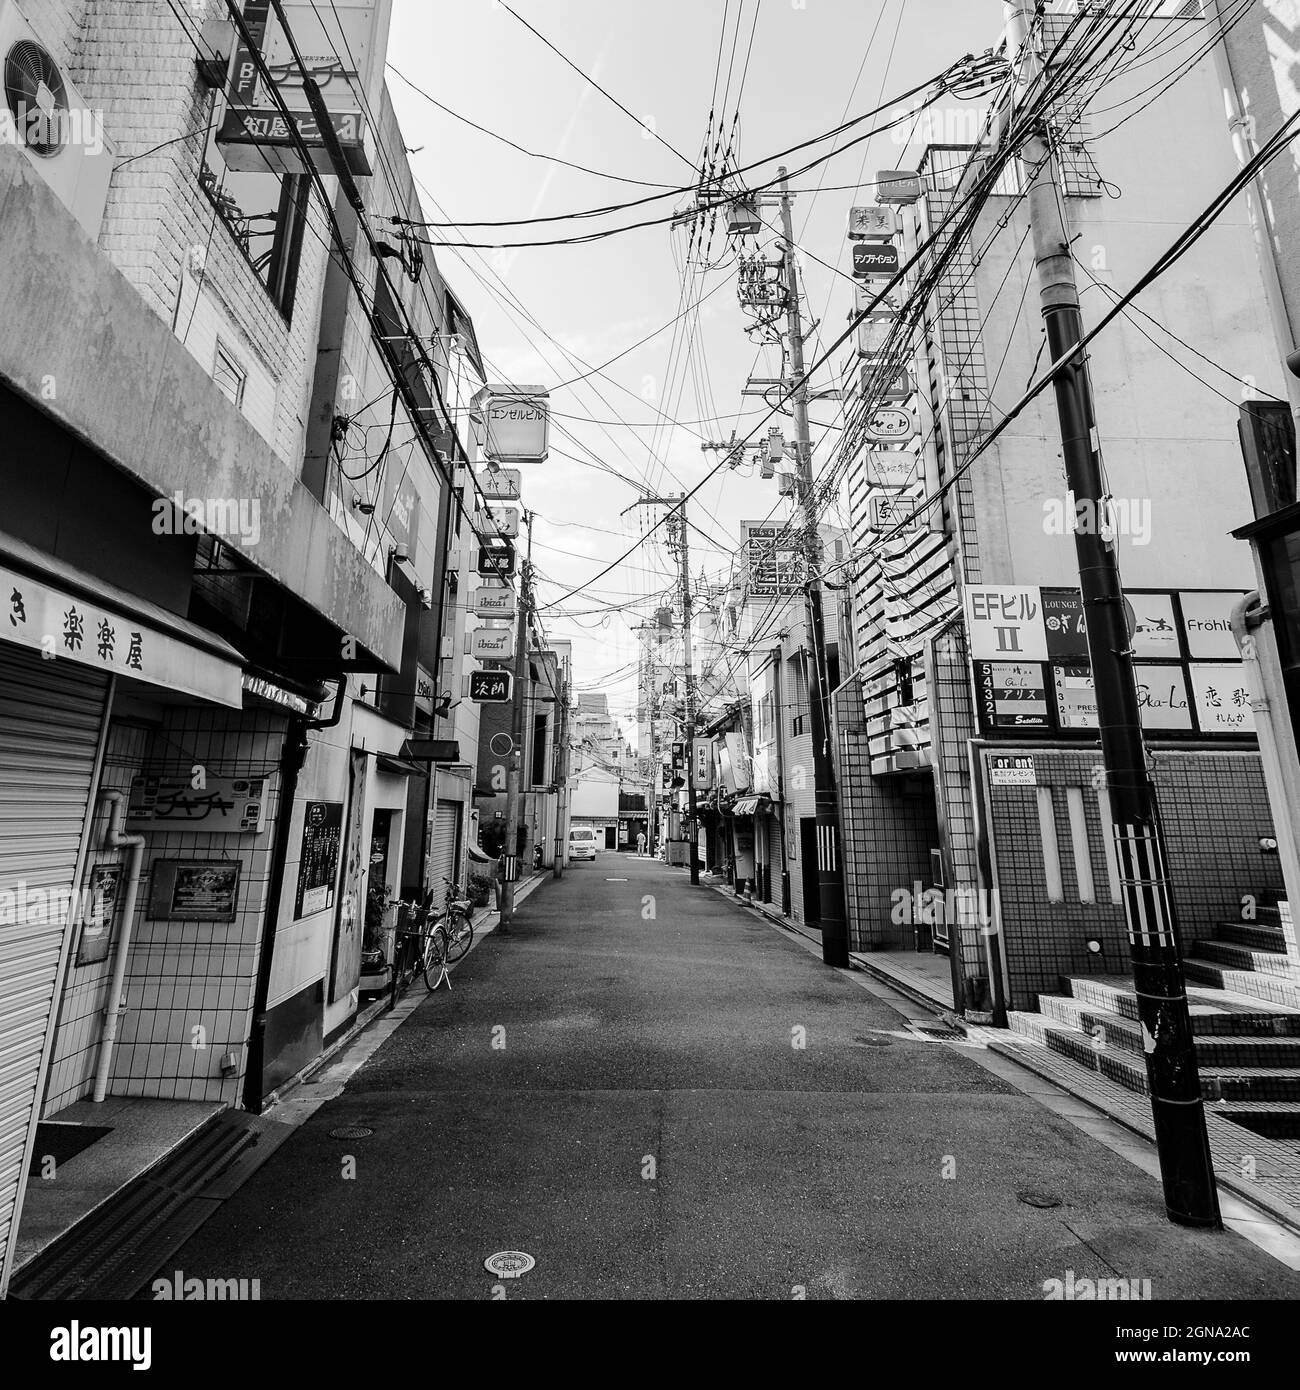 Kyoto street scenes, Traditional architecture, Historic neighborhoods, Japanese city life, Urban culture, Pedestrian pathways, Street markets Stock Photo